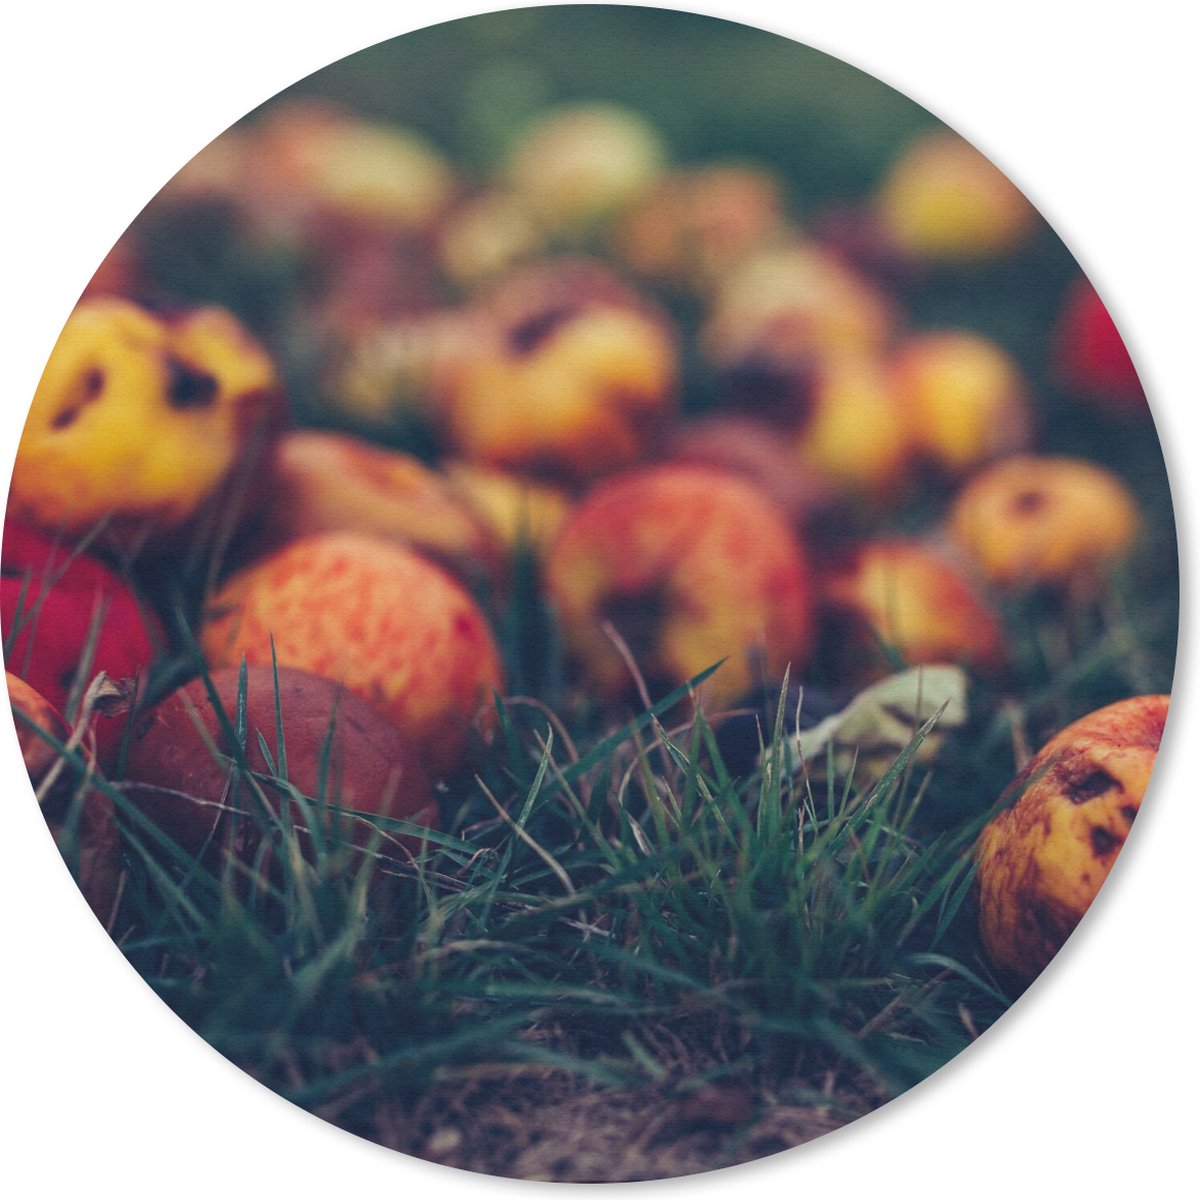 Muismat - Mousepad - Rond - Landelijke decoratie - Herfst - Appel - Fruit - 40x40 cm - Ronde muismat